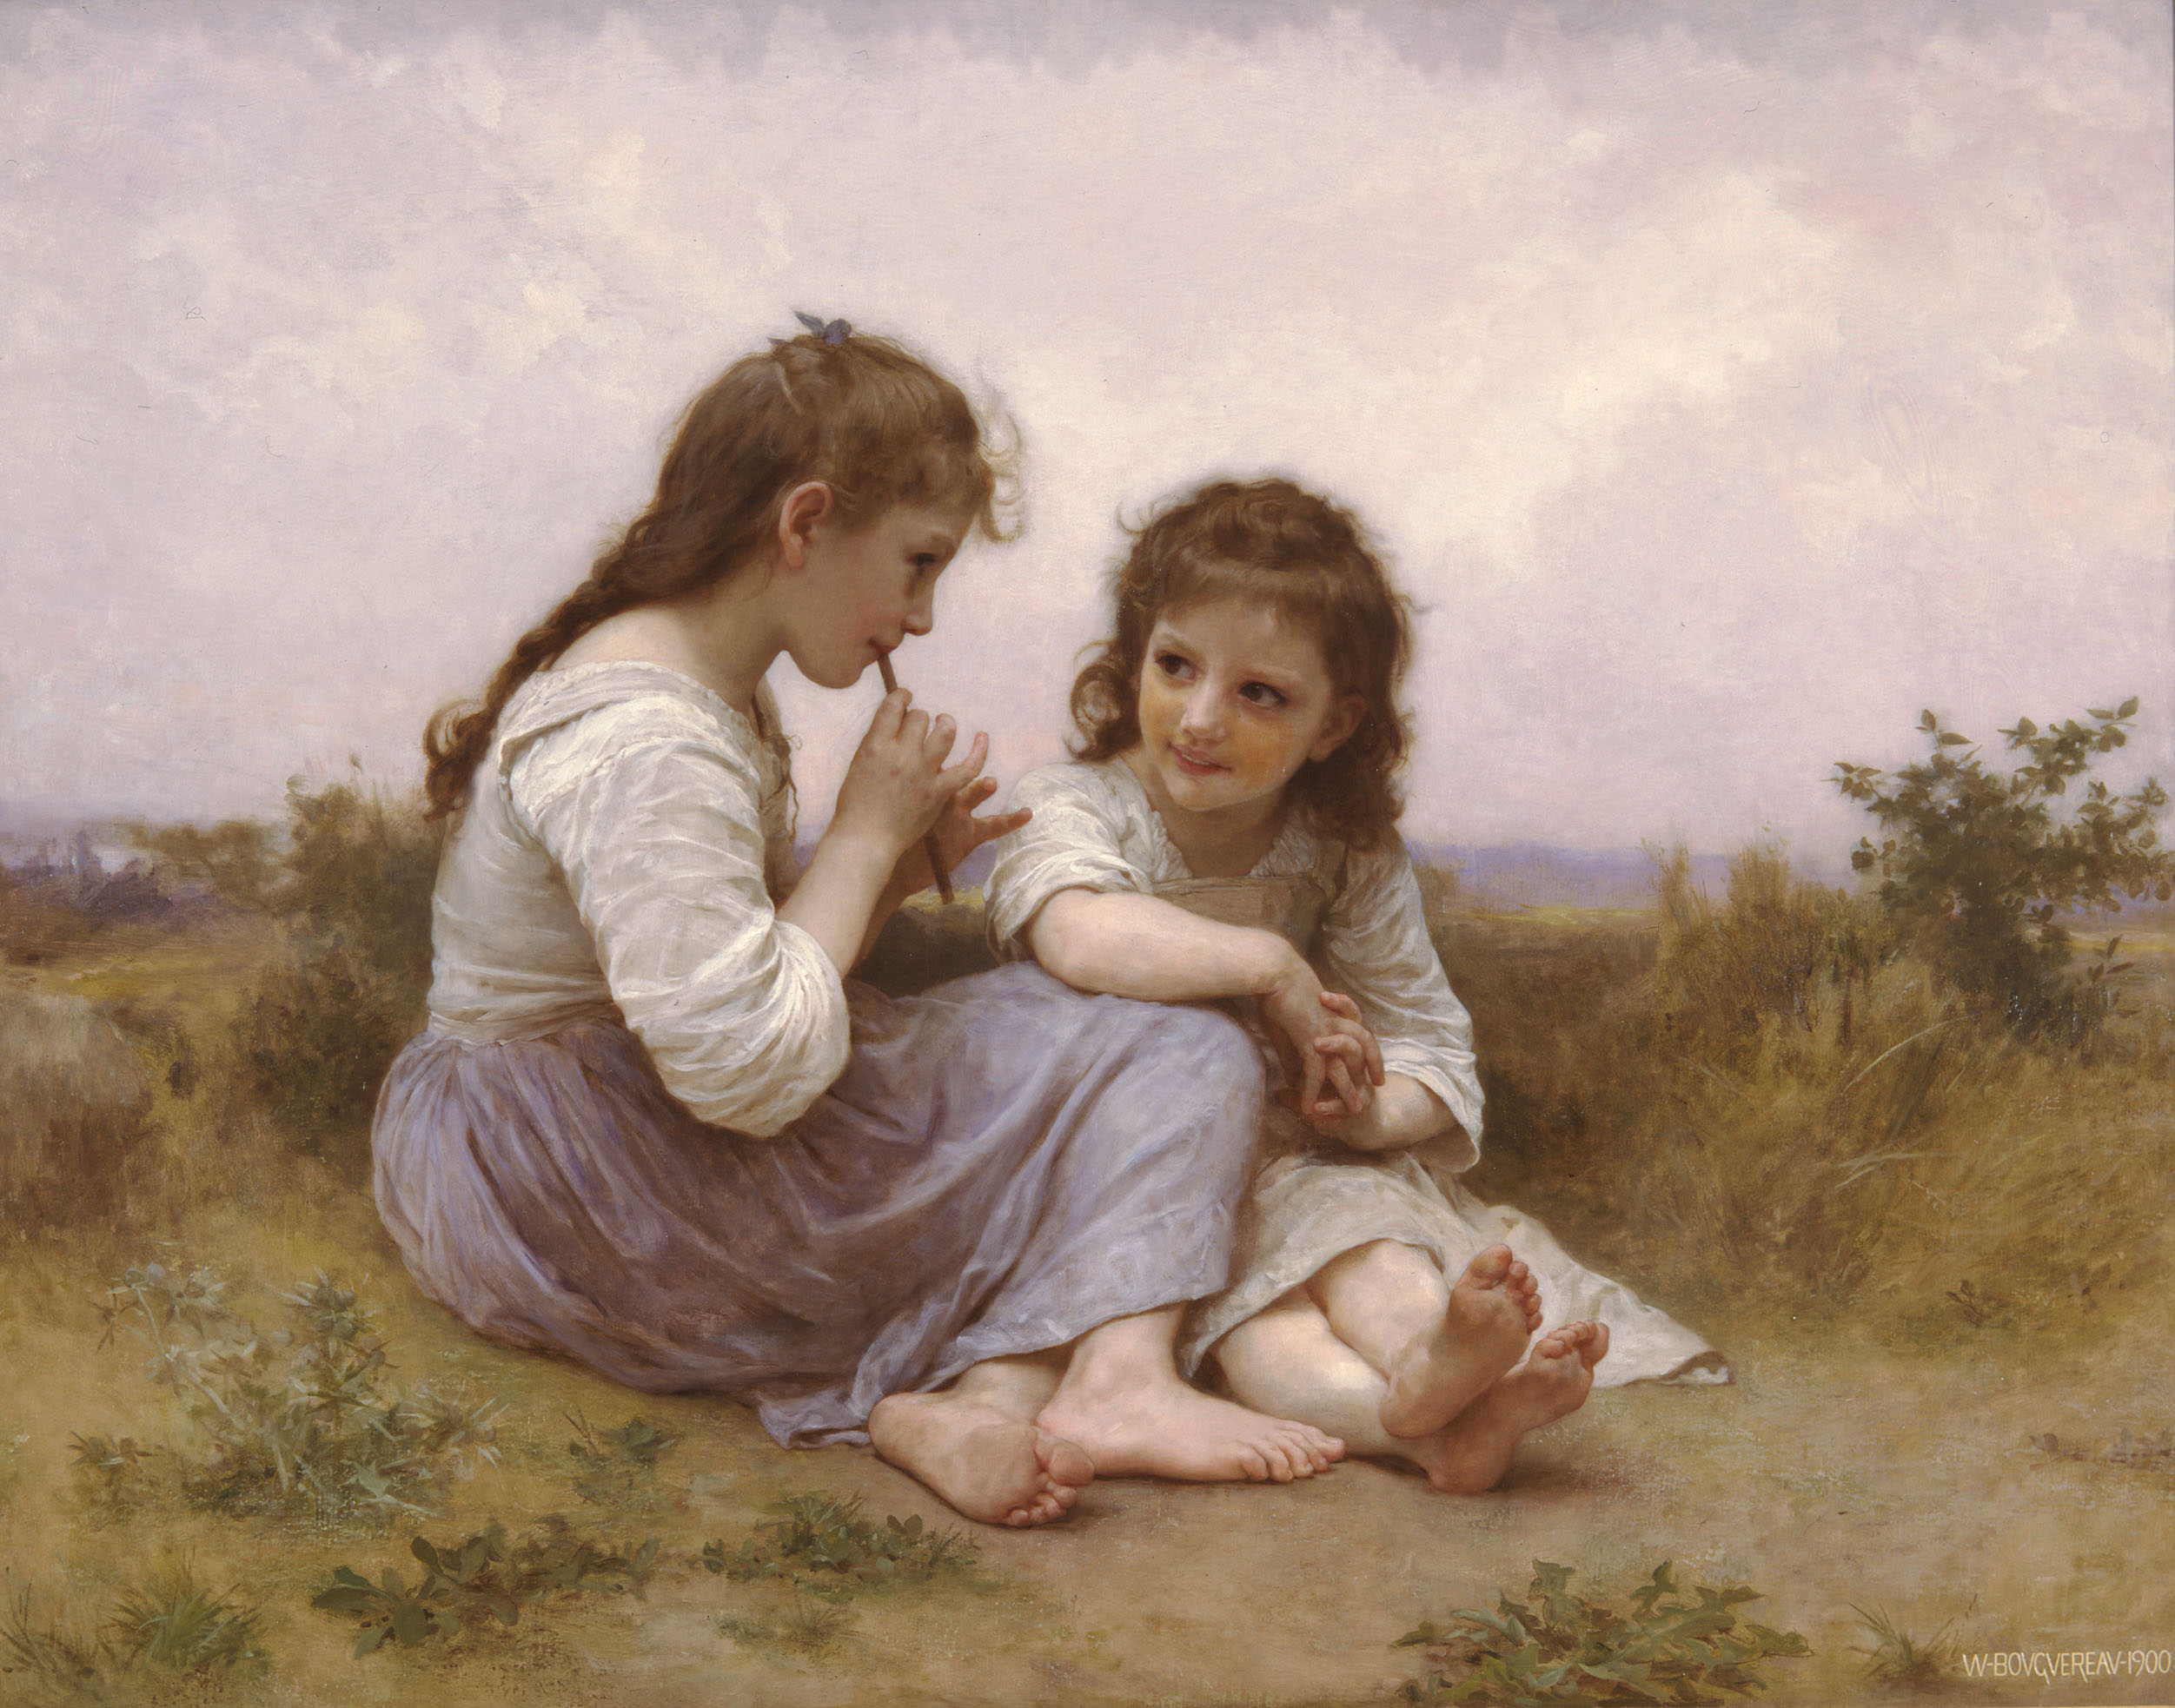 William-Adolphe Bouguereau (1825-1905) - A Childhood Idyll (1900)